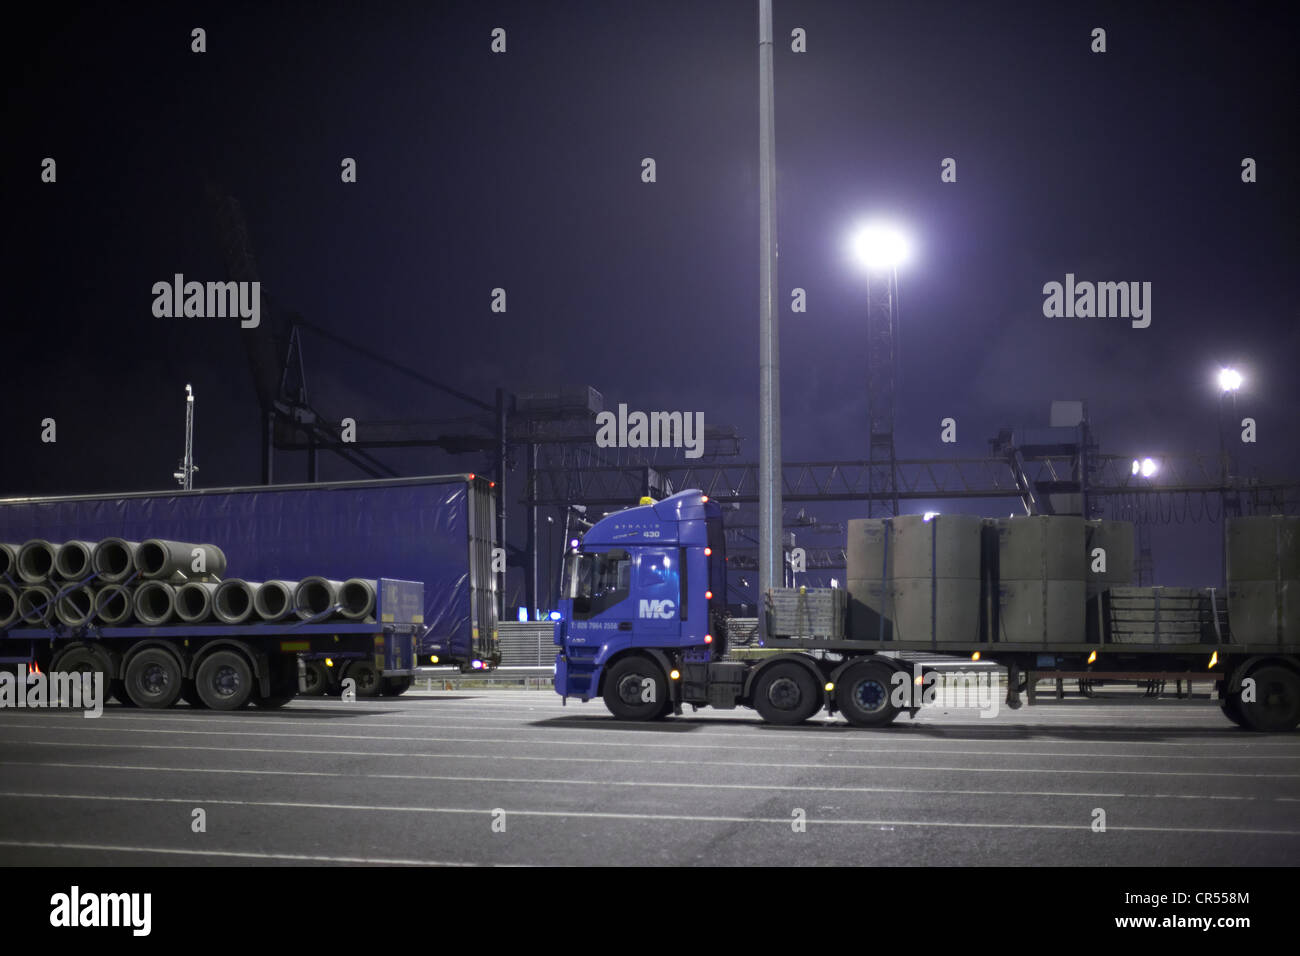 lorries waiting at stena line terminal at night in belfast harbour northern ireland uk Stock Photo